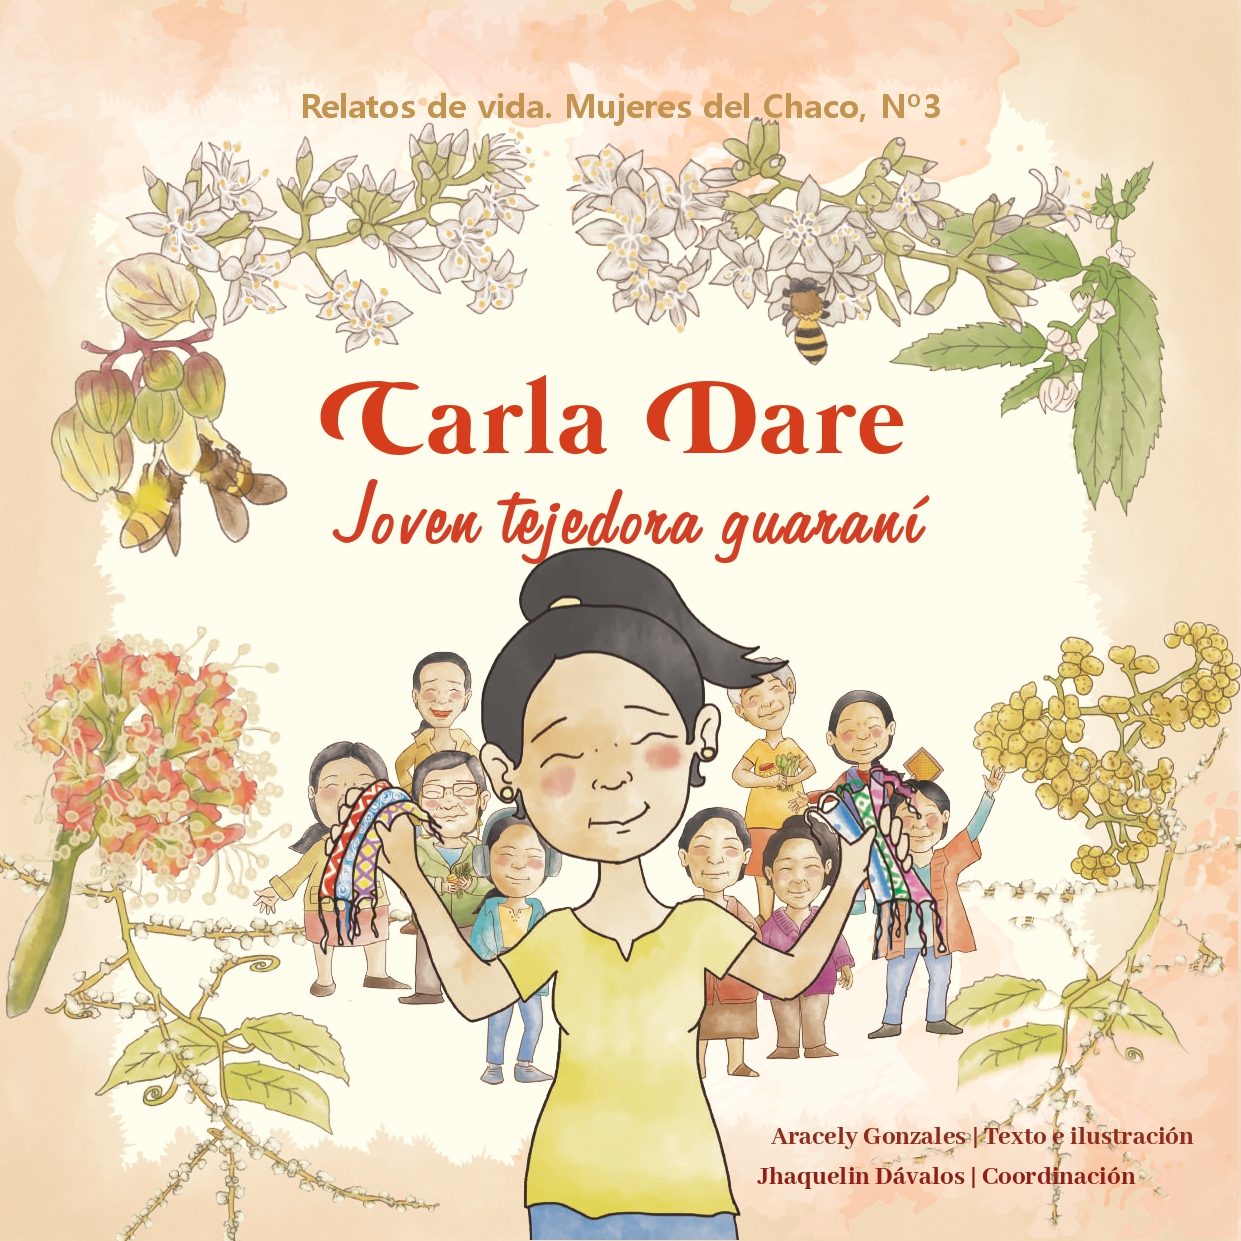 Carla Dare, joven tejedora guaraní